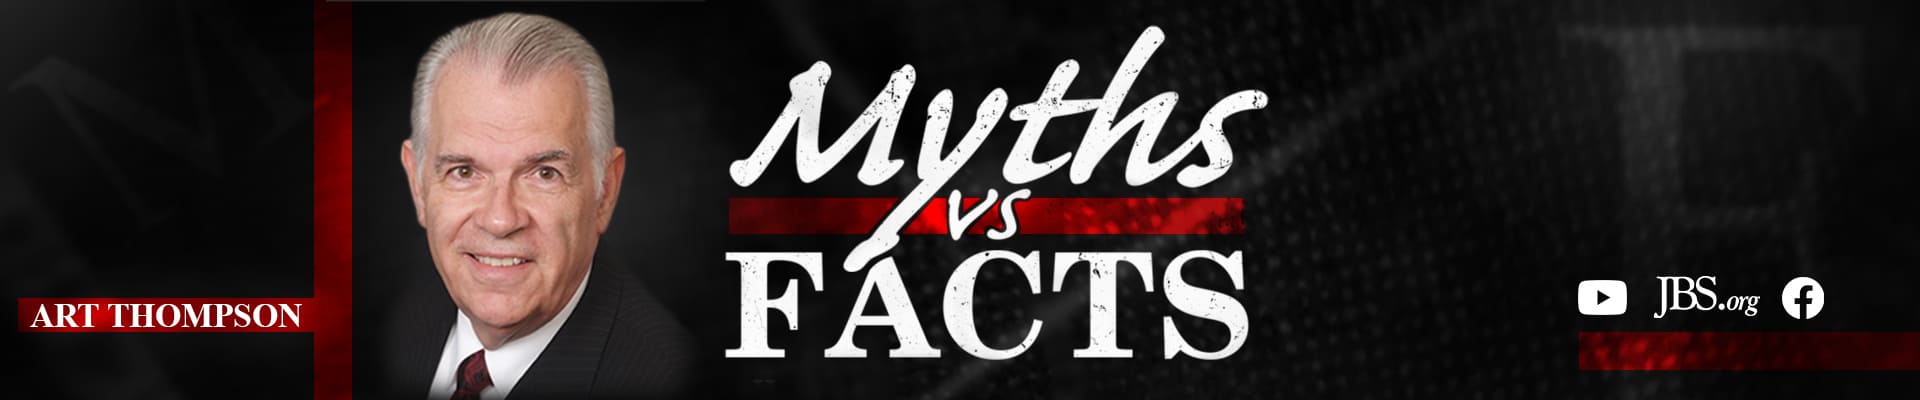 John Birch Society Video: Myths vs Facts